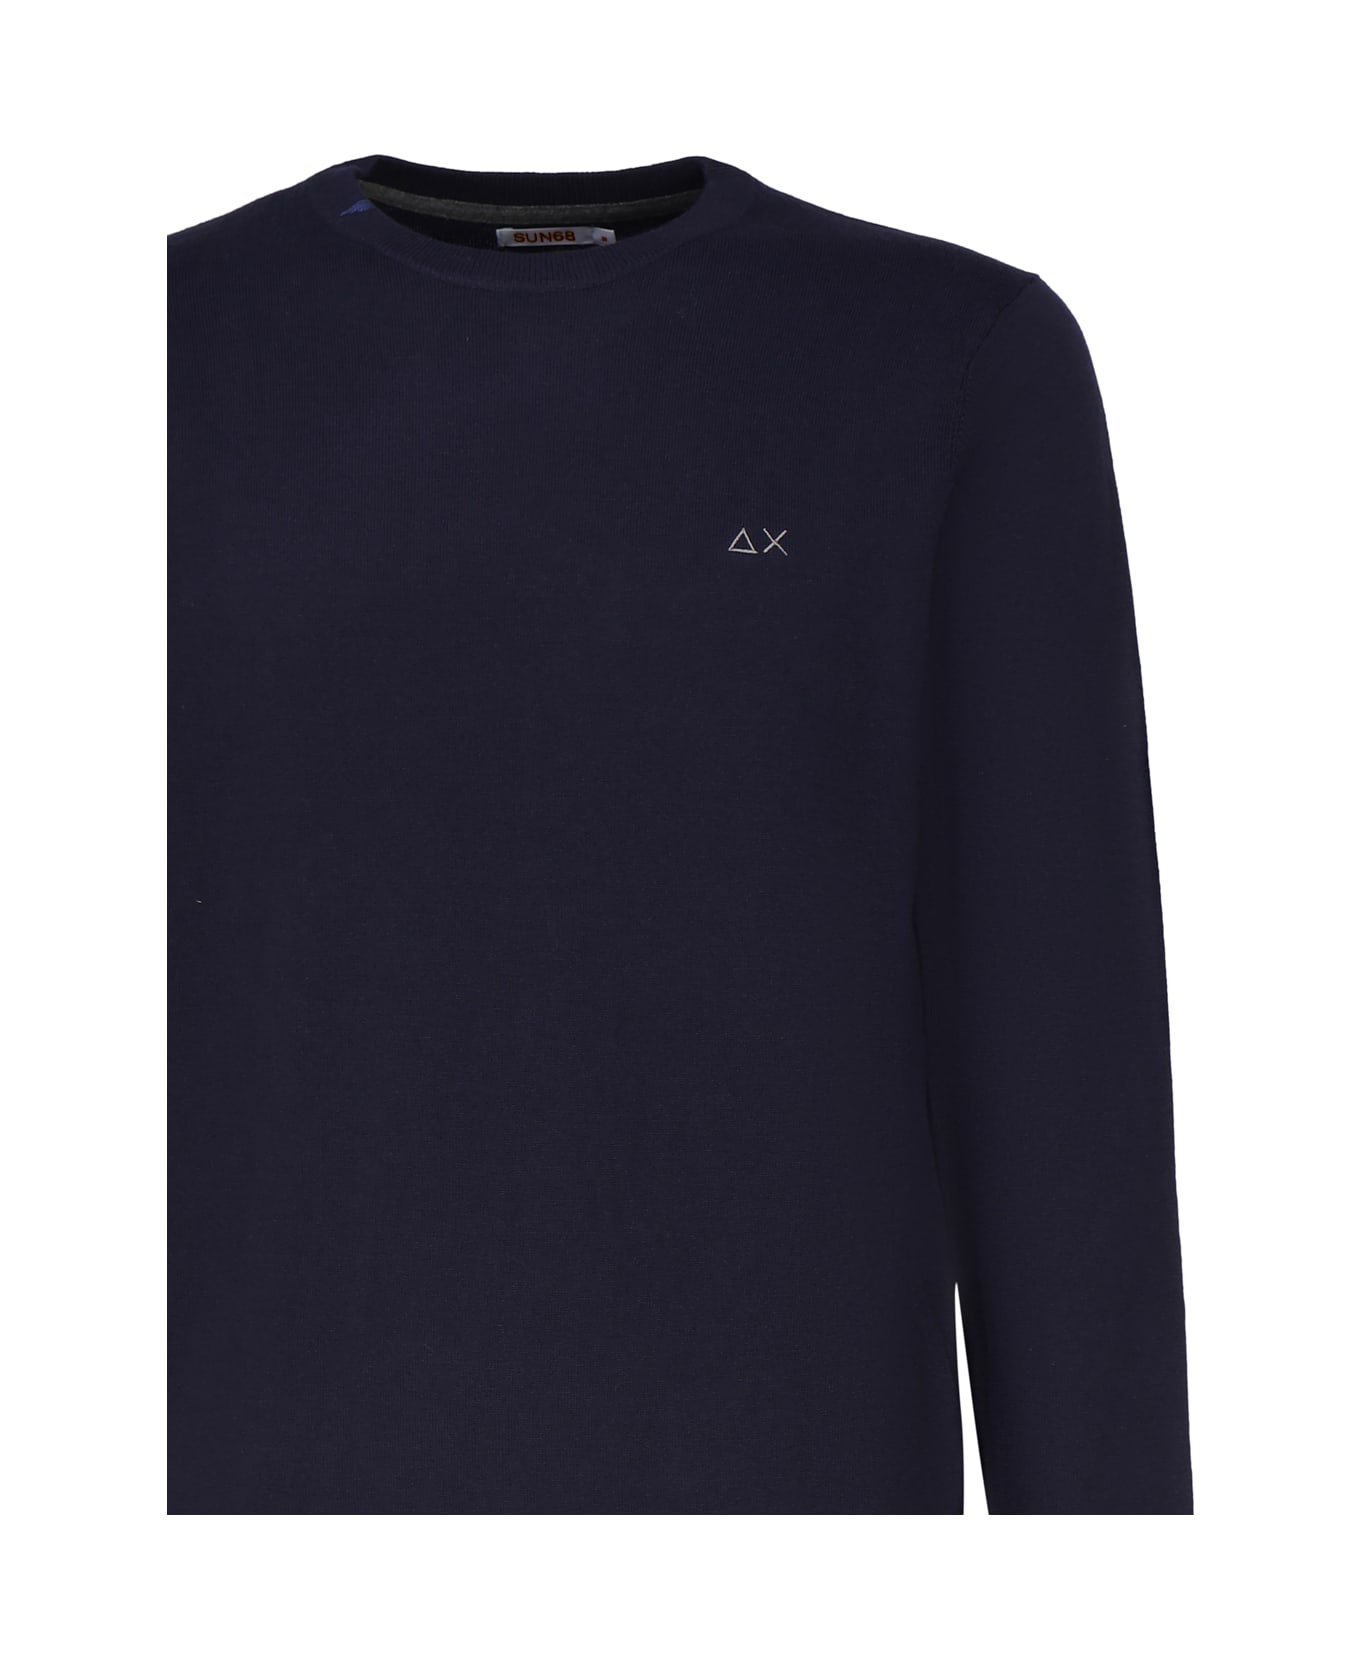 Sun 68 Sweater With Logo Sweater - NAVY BLUE ニットウェア